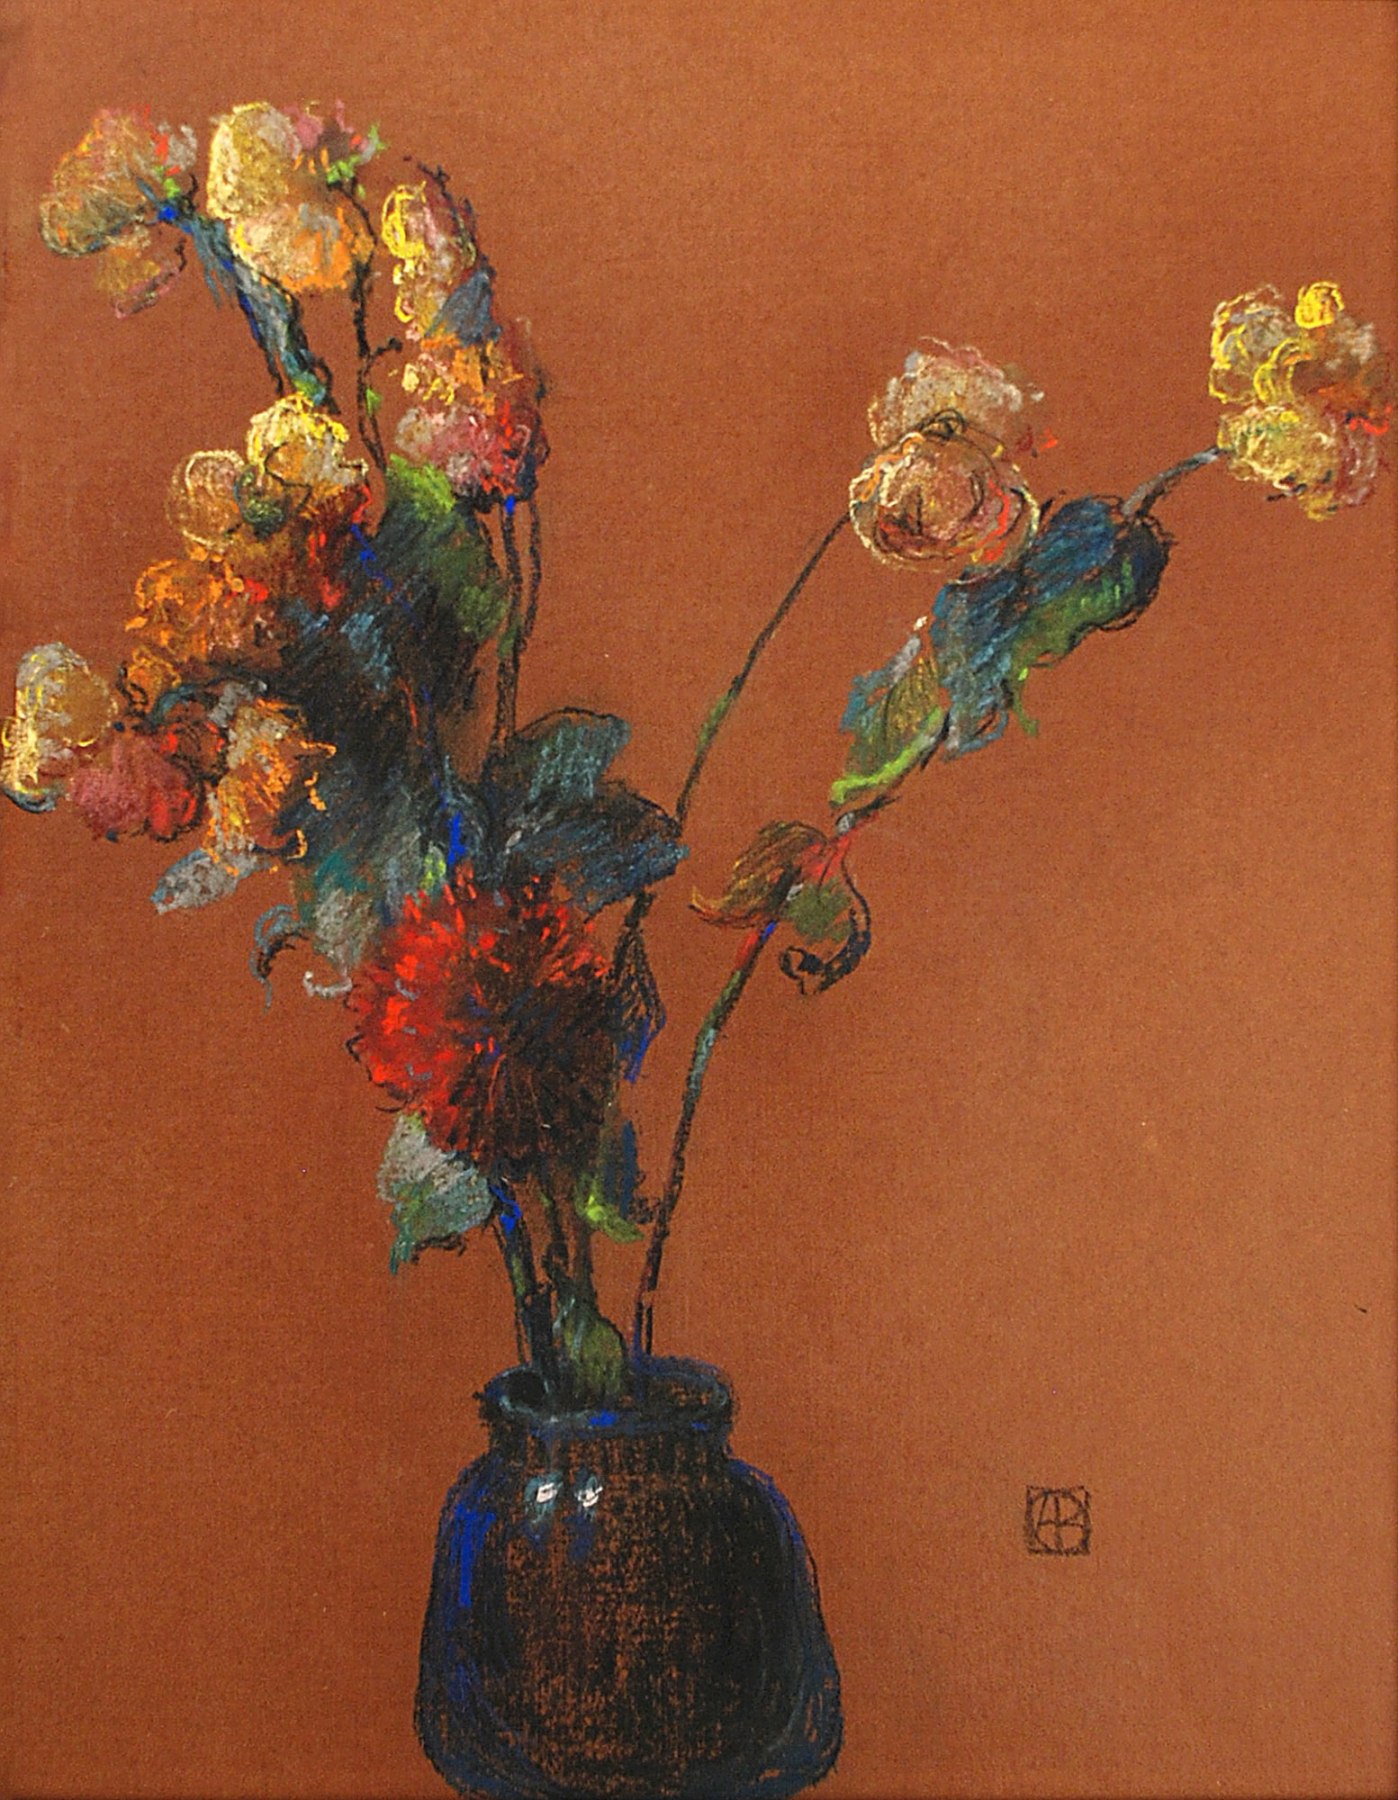 LEON DABO (1864-1960), Abstraction avec un Zinnia, c. 1915